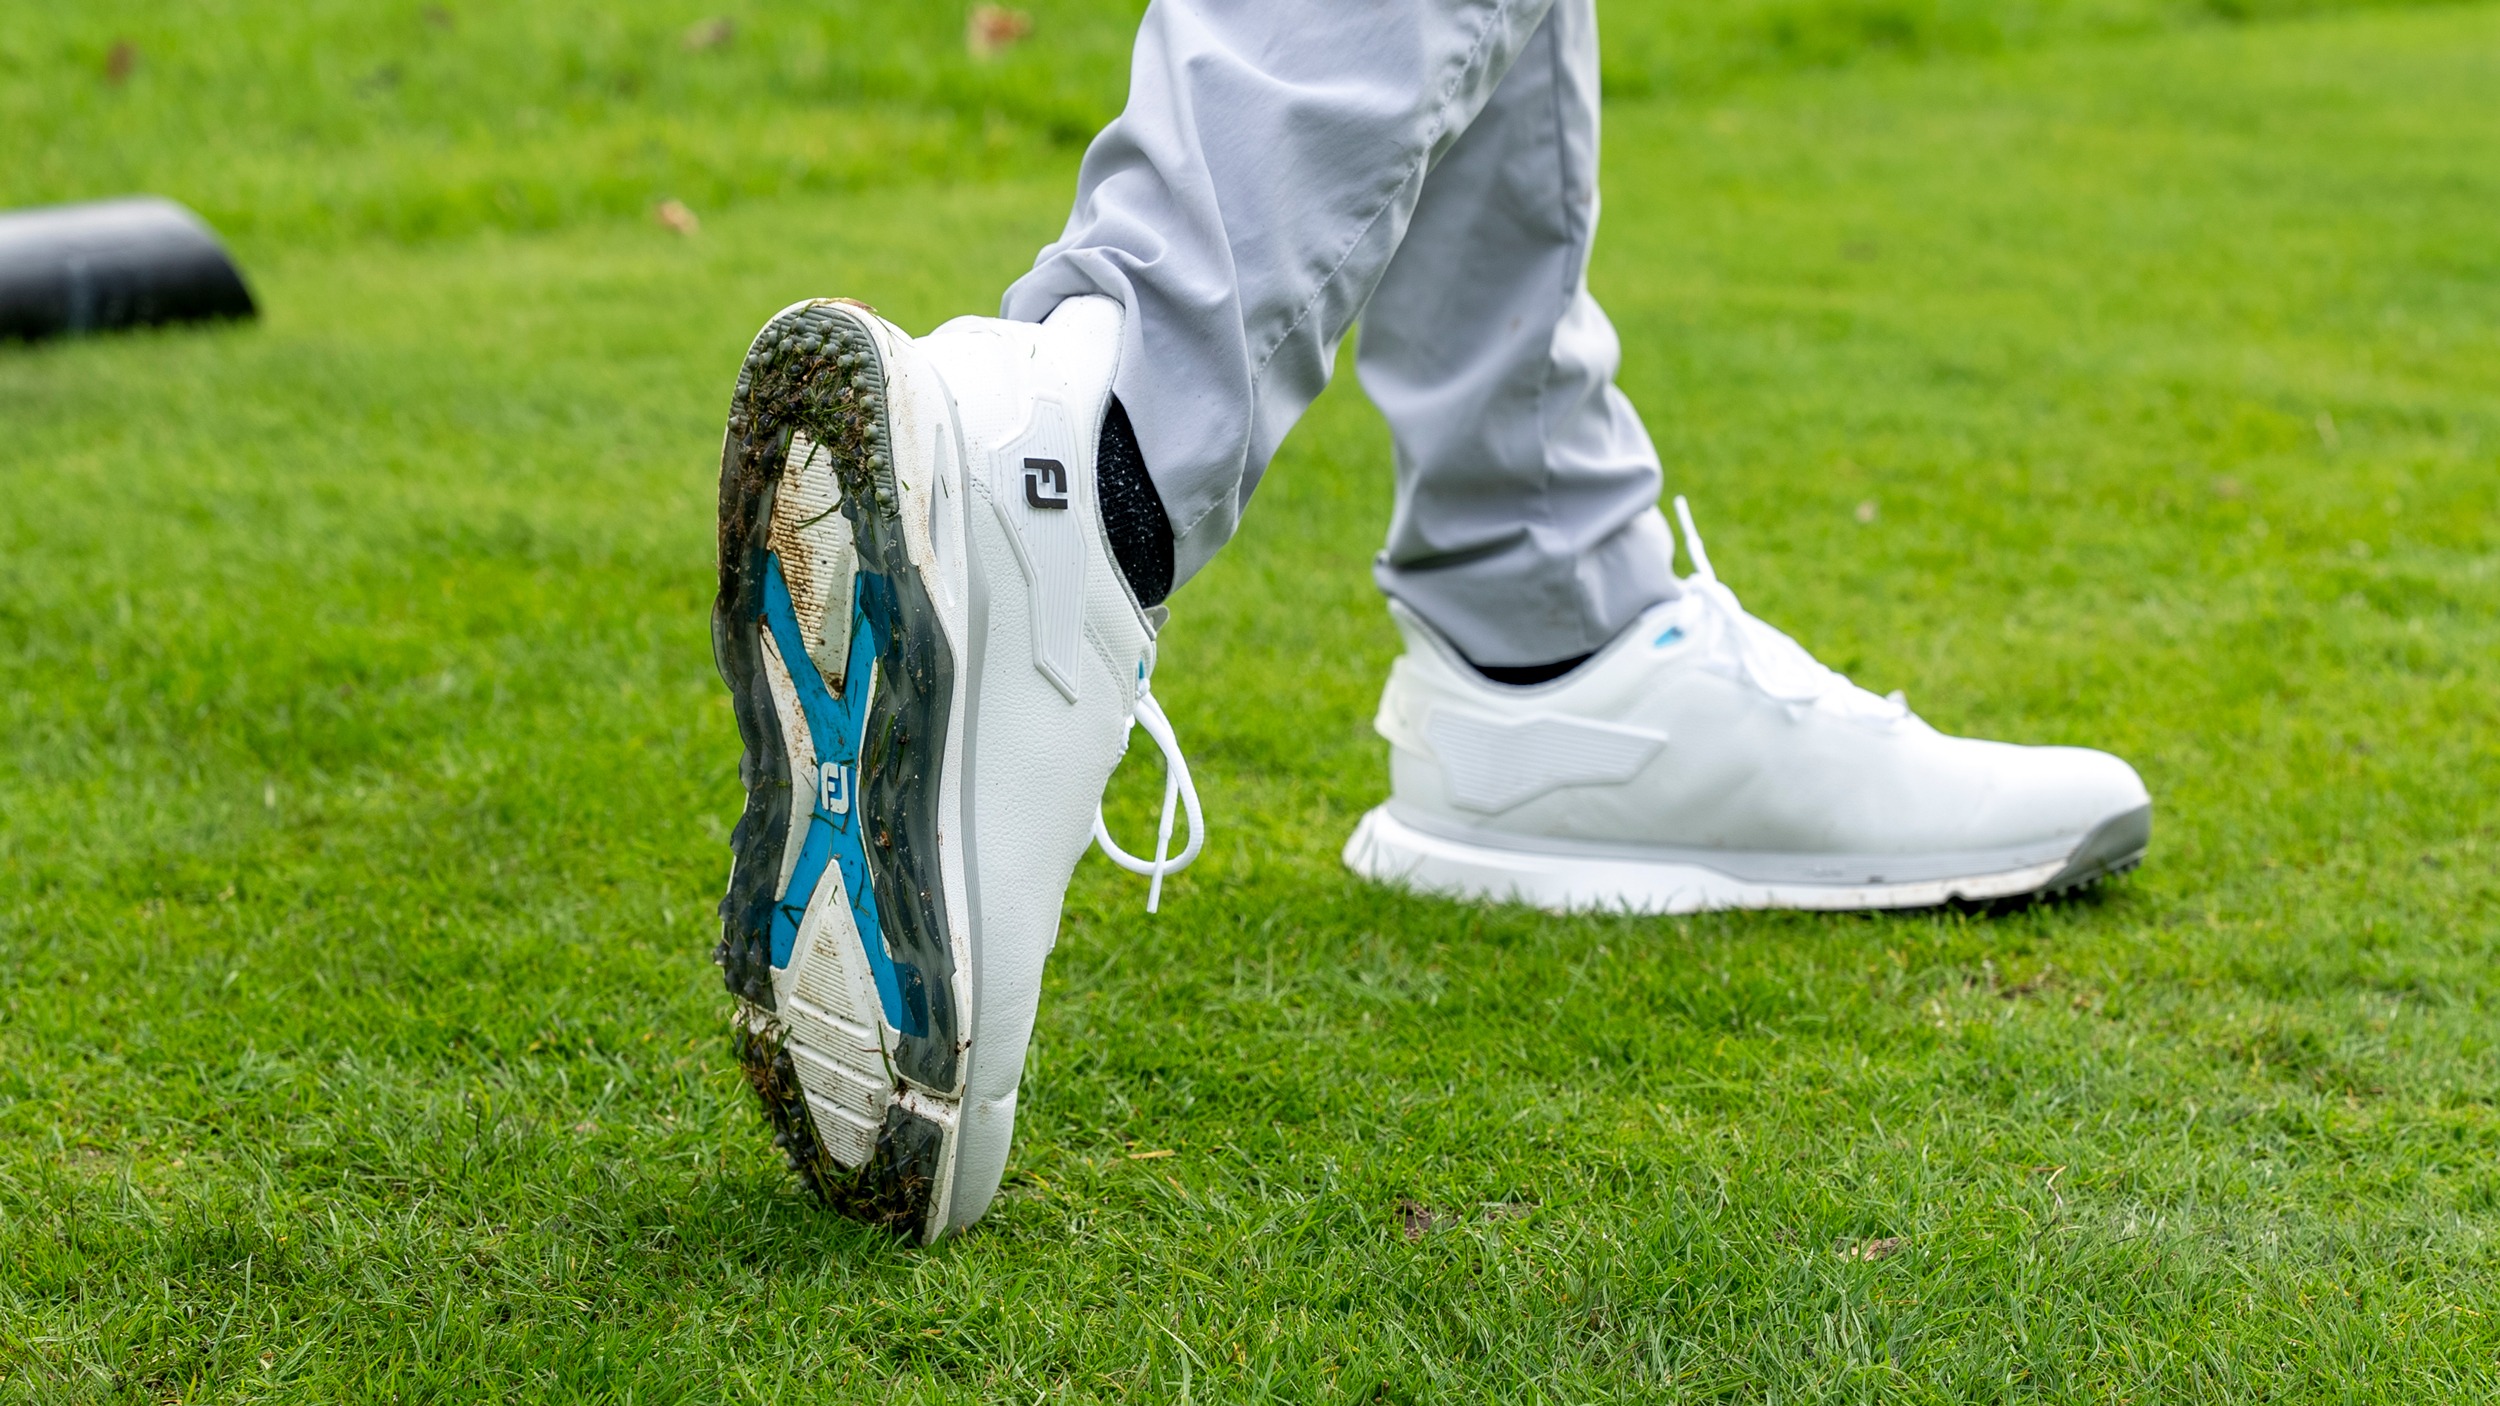 FootJoy Pro/SLX Golf Shoe testing